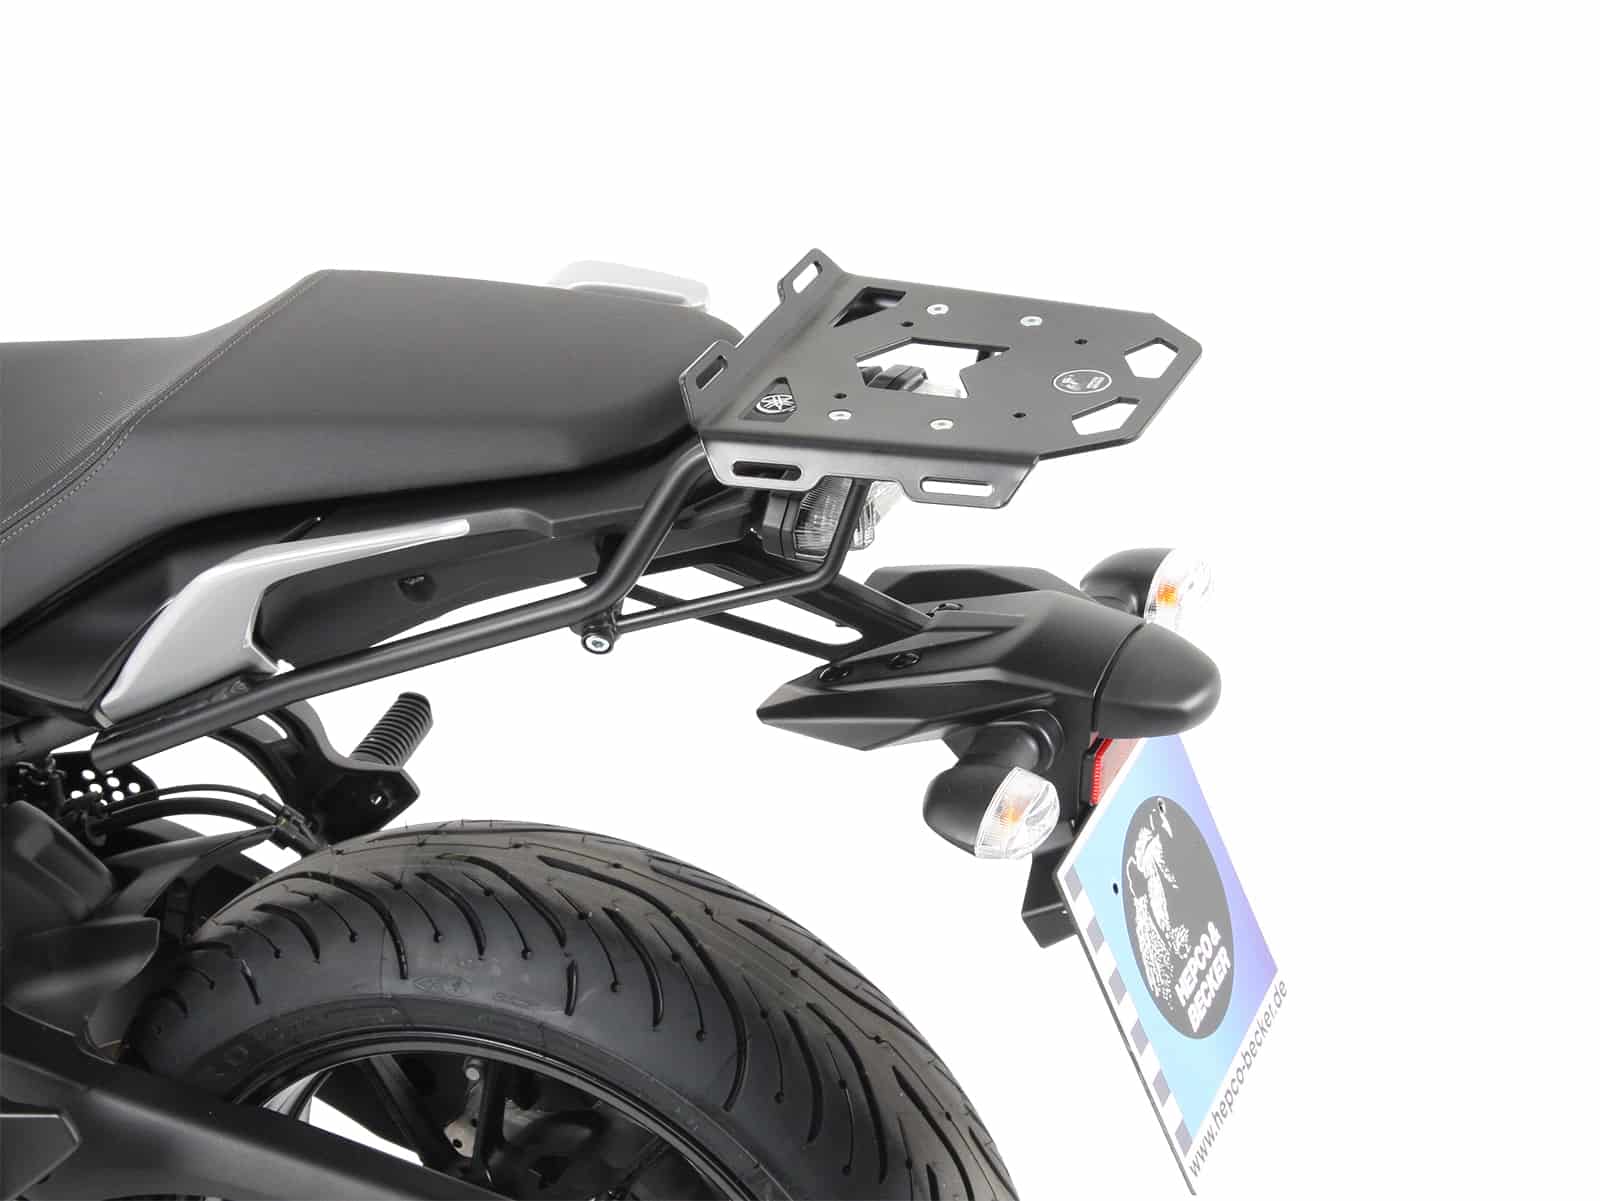 Minirack soft luggage rear rack for Yamaha Tracer 700 (2016-2020)